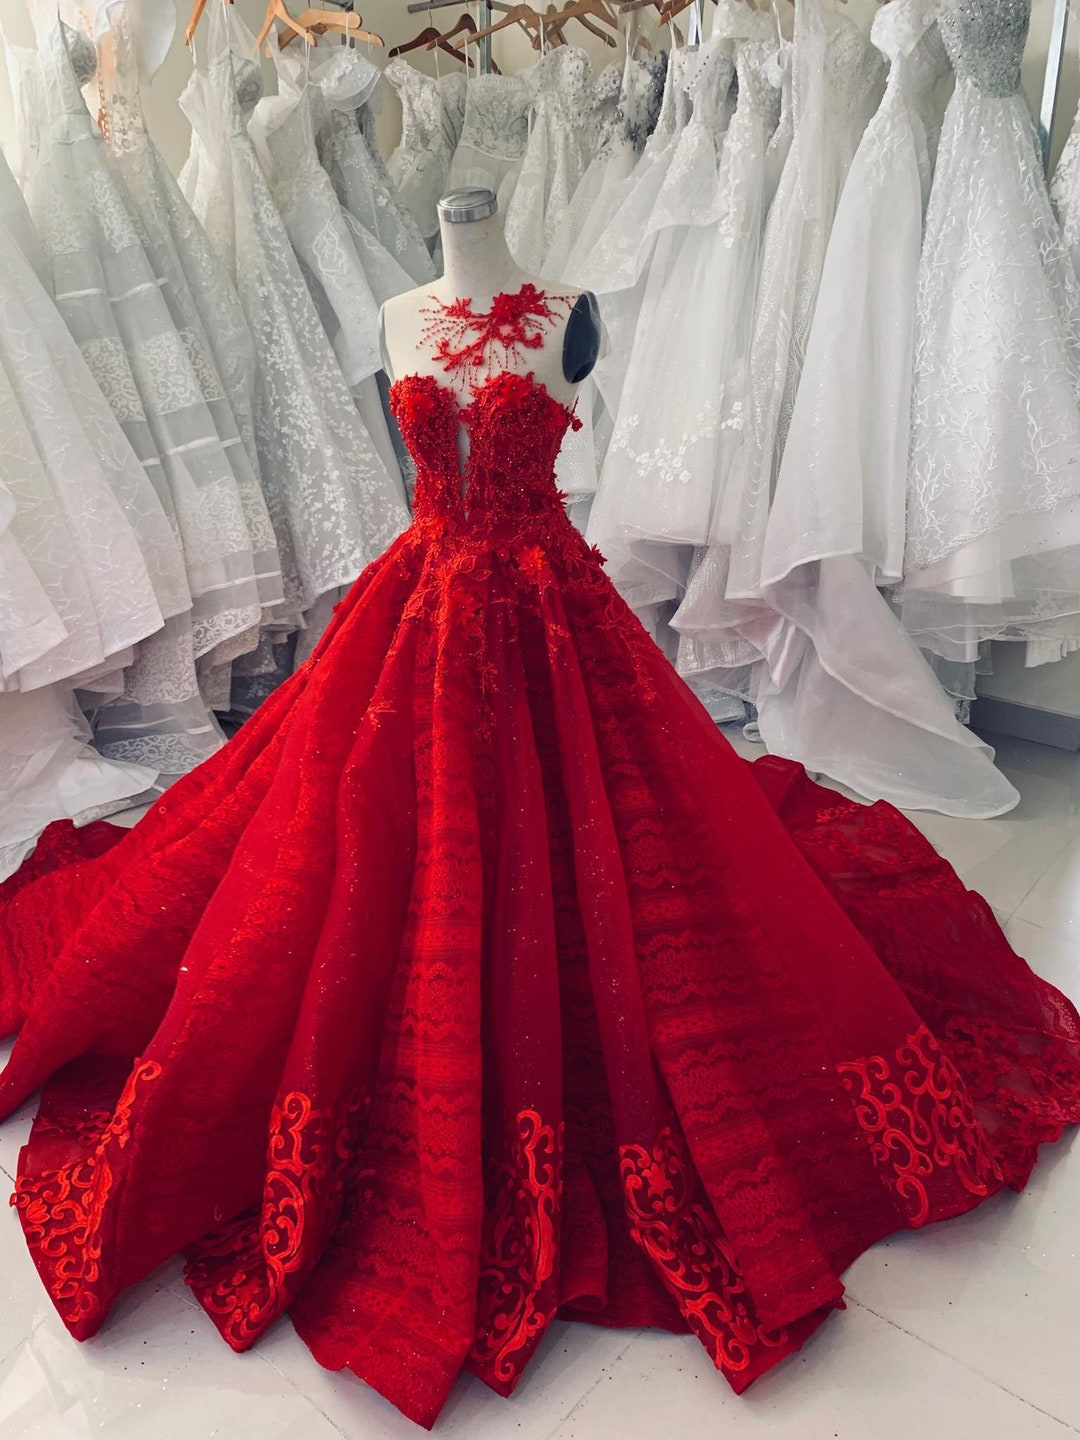 14 Elegant Ways to Add Red to Your Wedding | DaVinci Bridal Blog